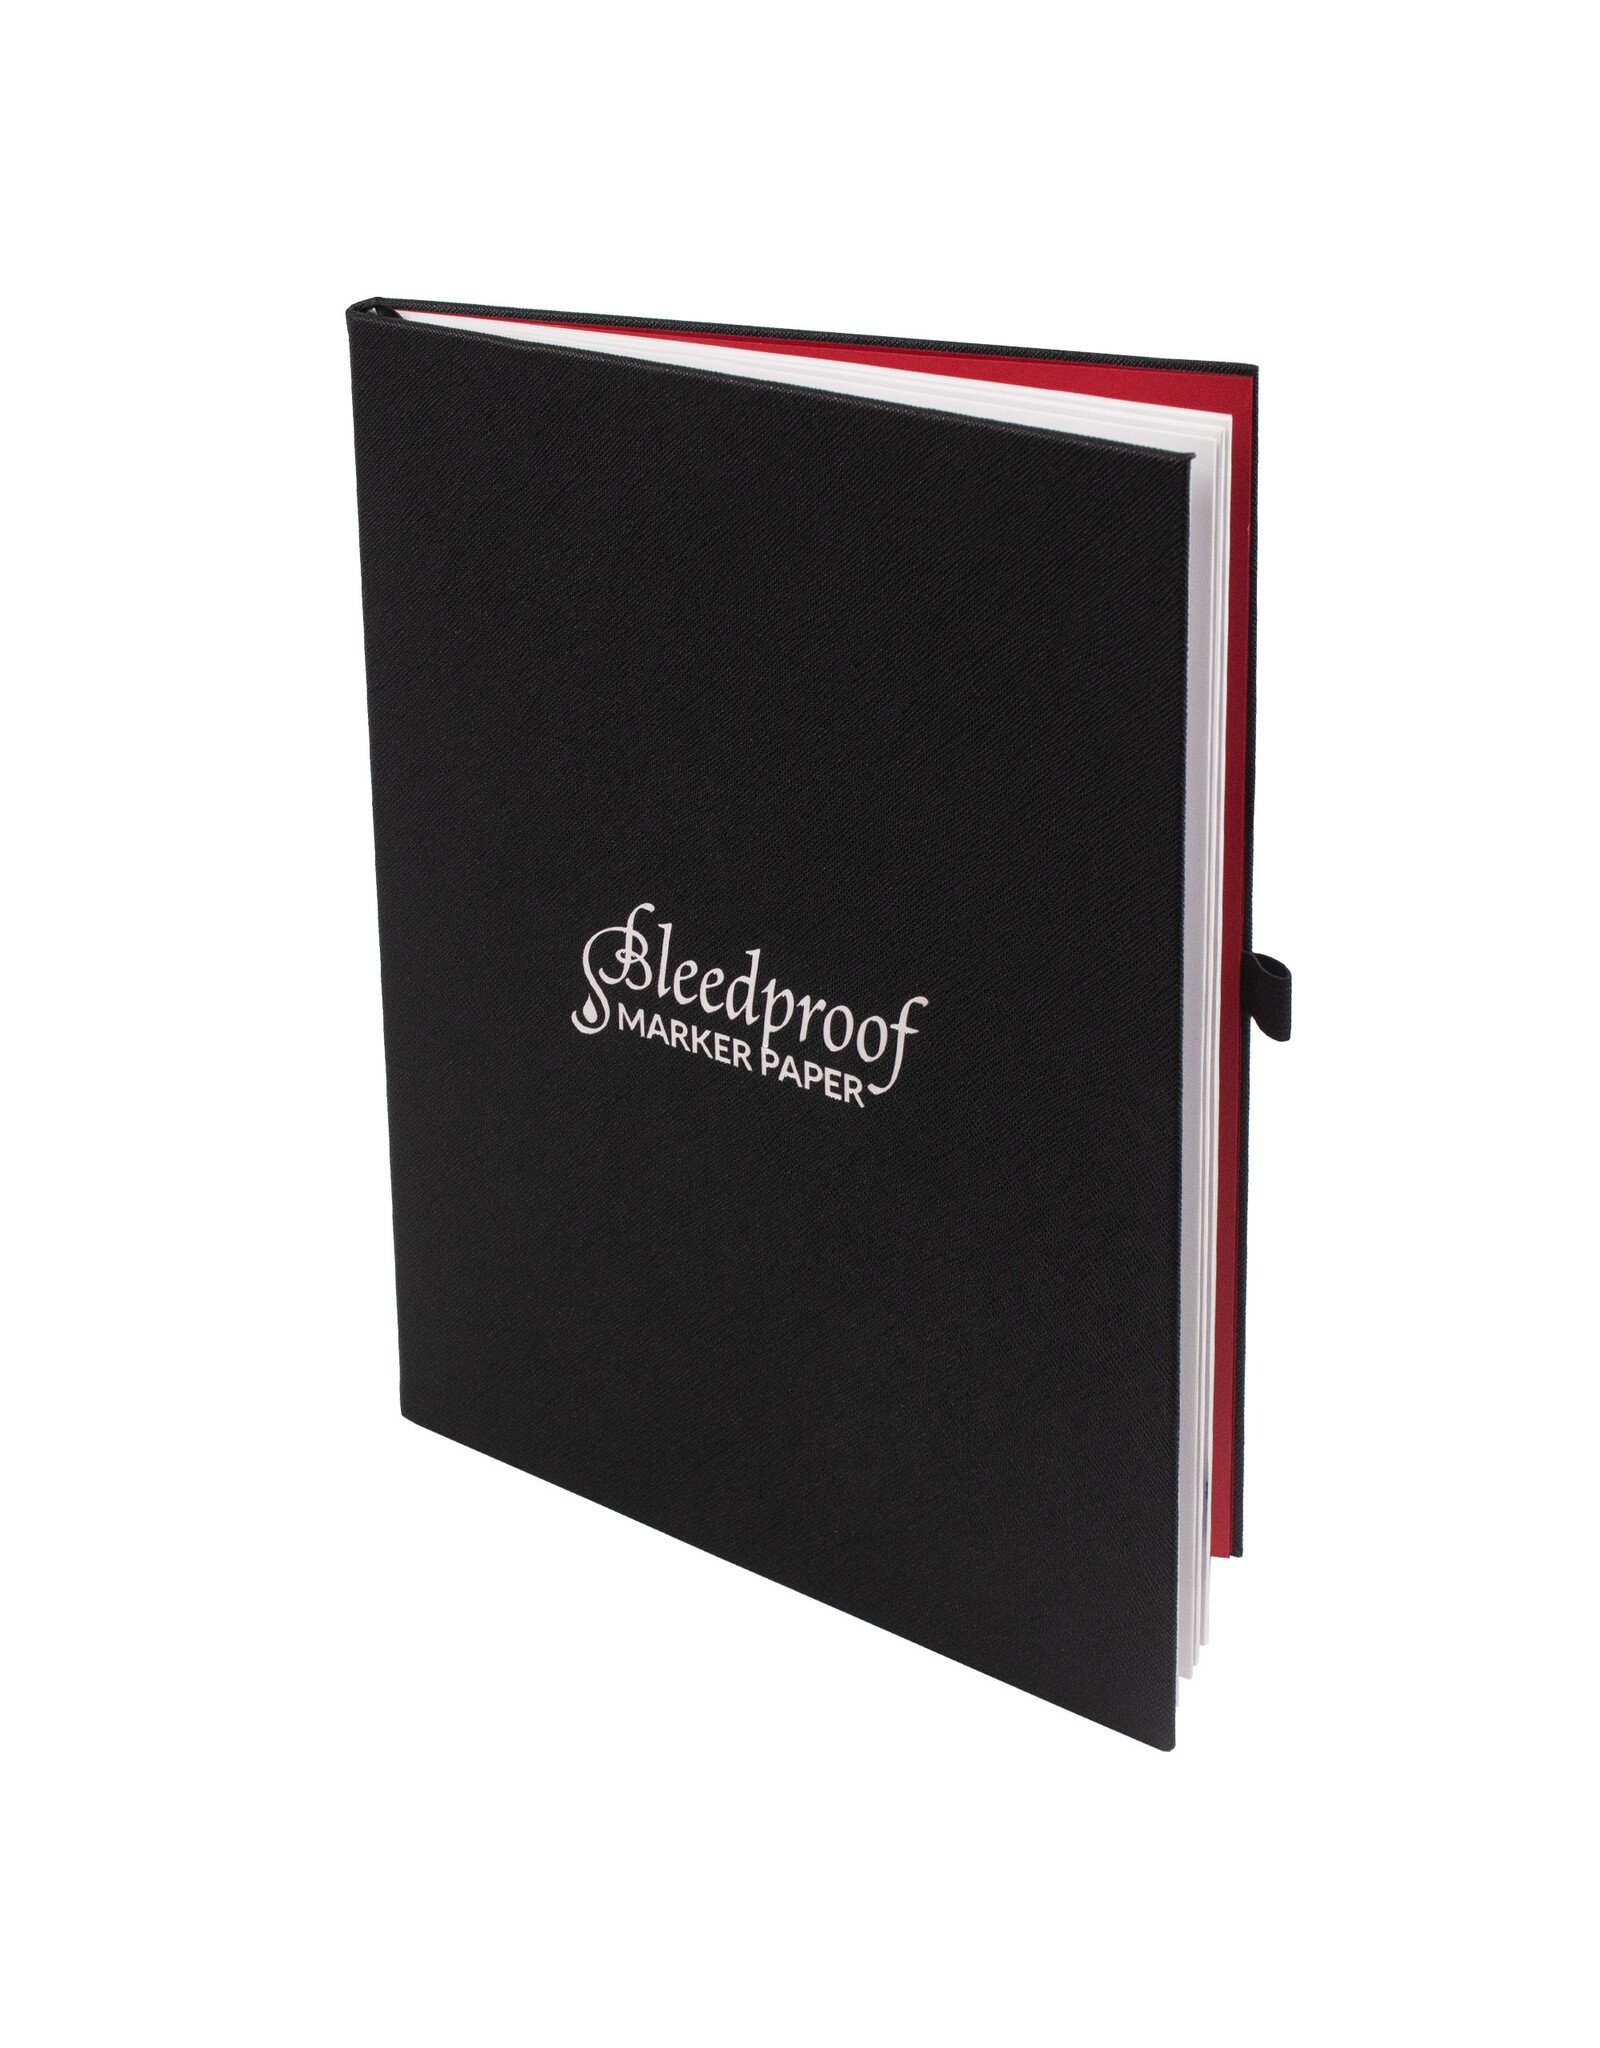 WA Portman A4 Black Paper Sketchbook - The Art Store/Commercial Art Supply